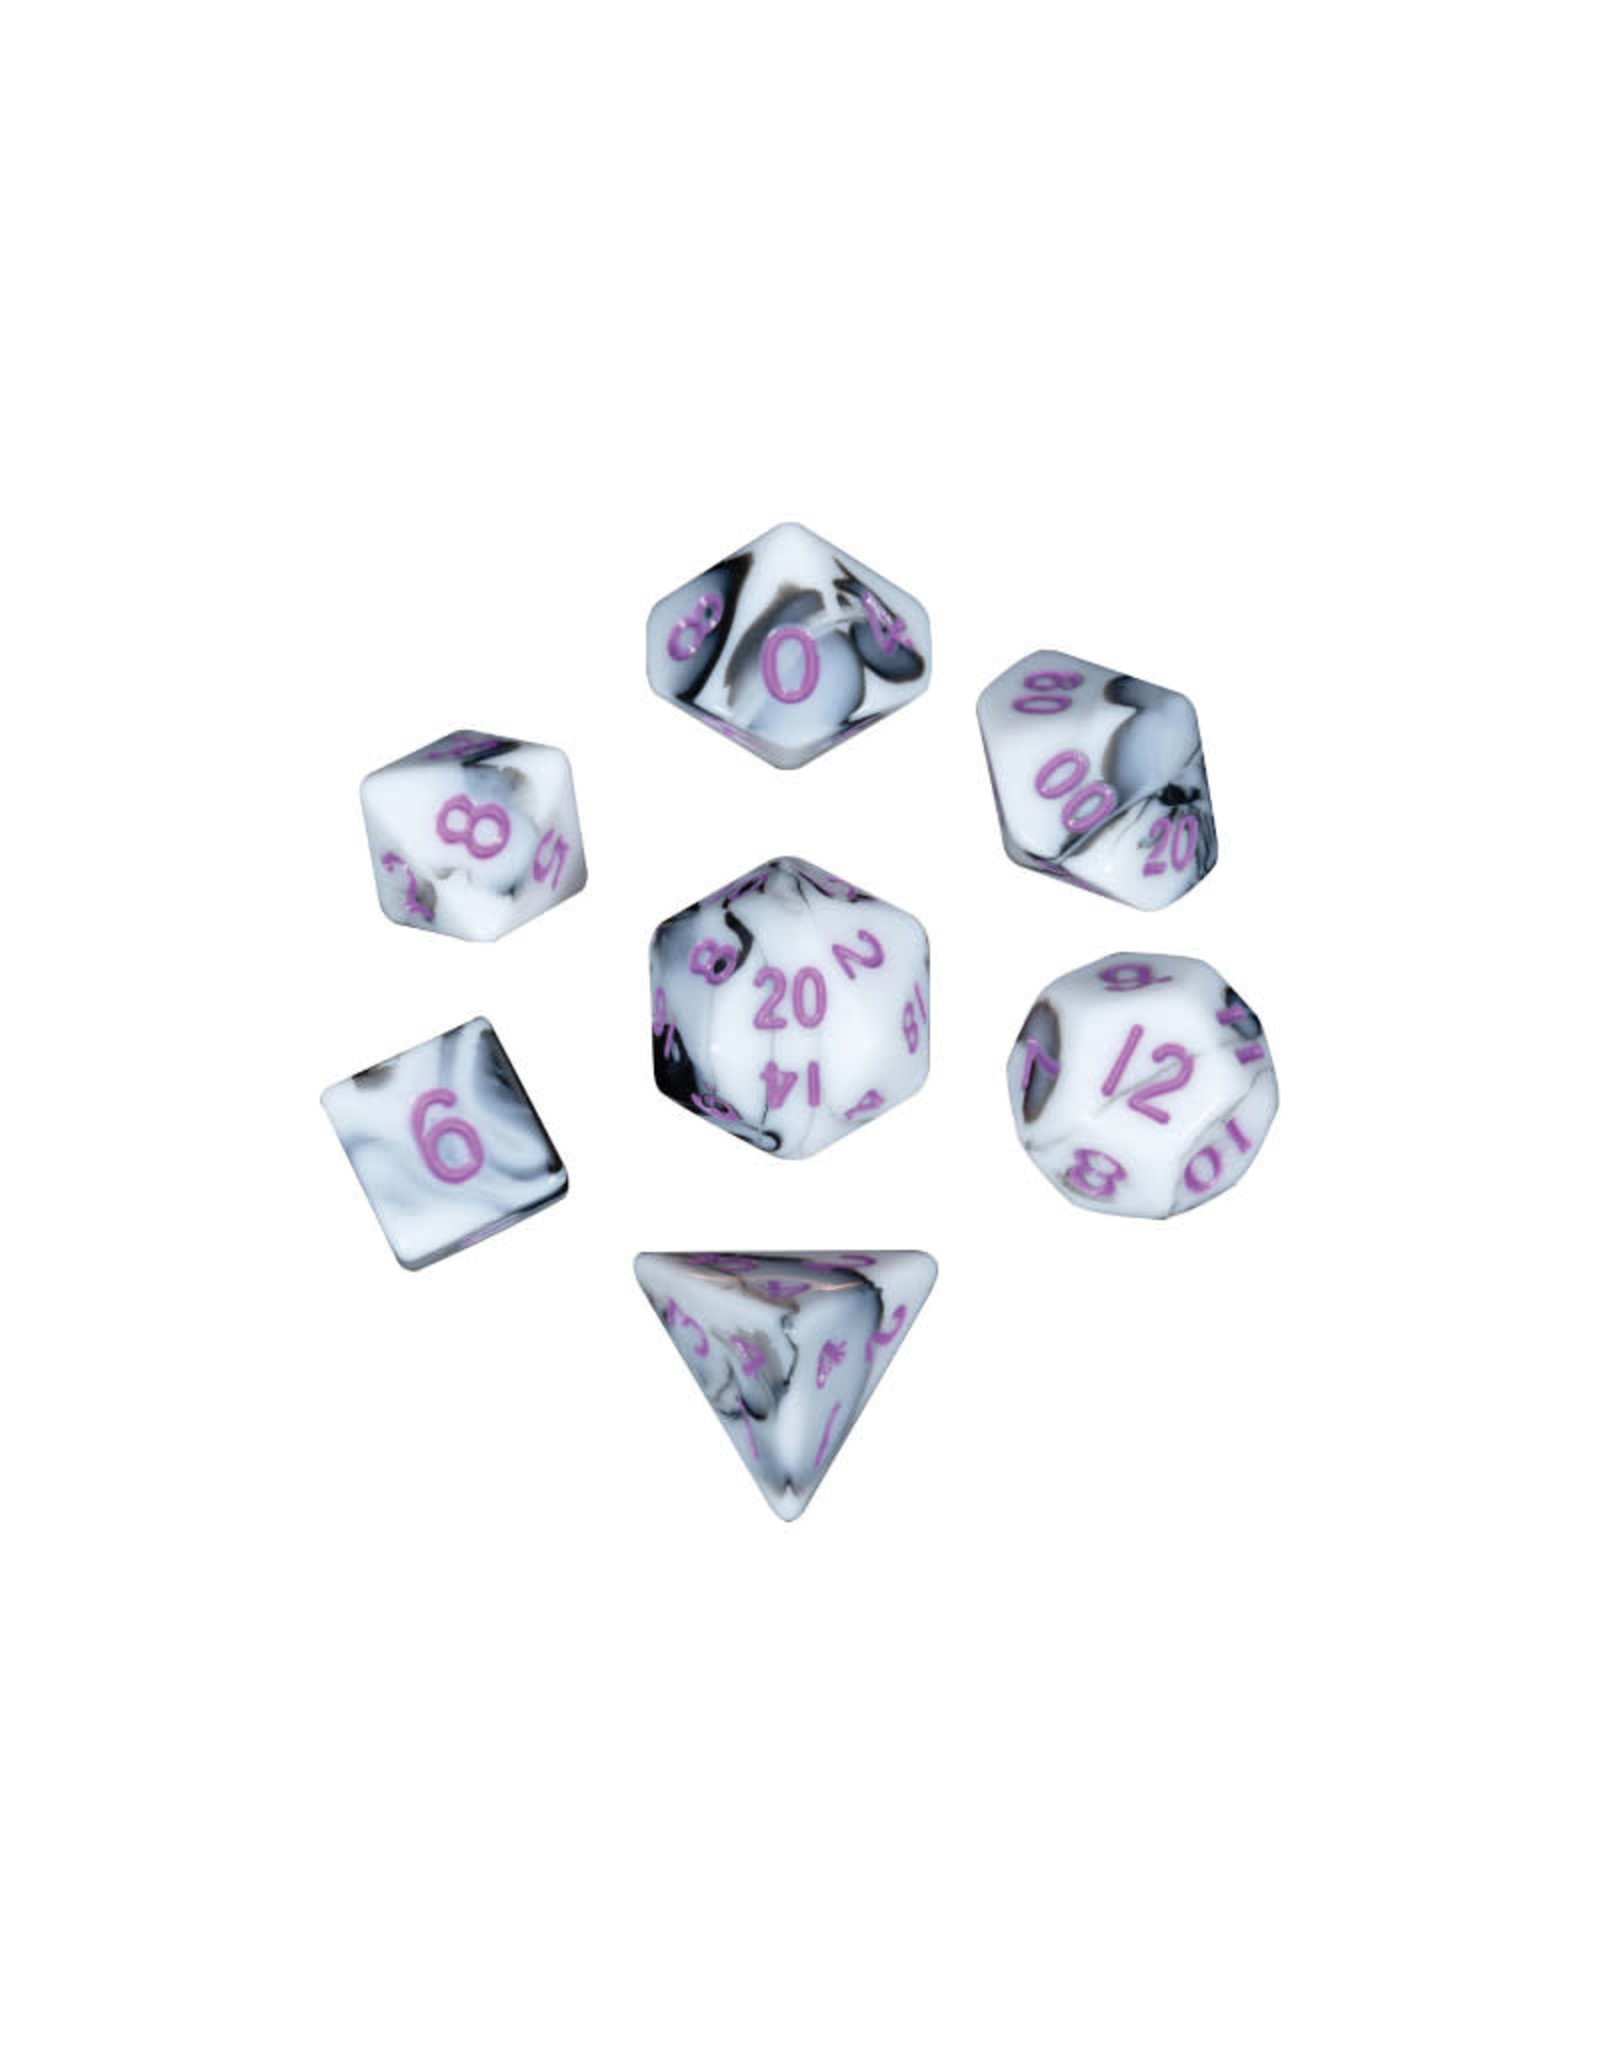 Metallic Dice Games Mini Polyhedral Dice Set (7) Marble with Purple